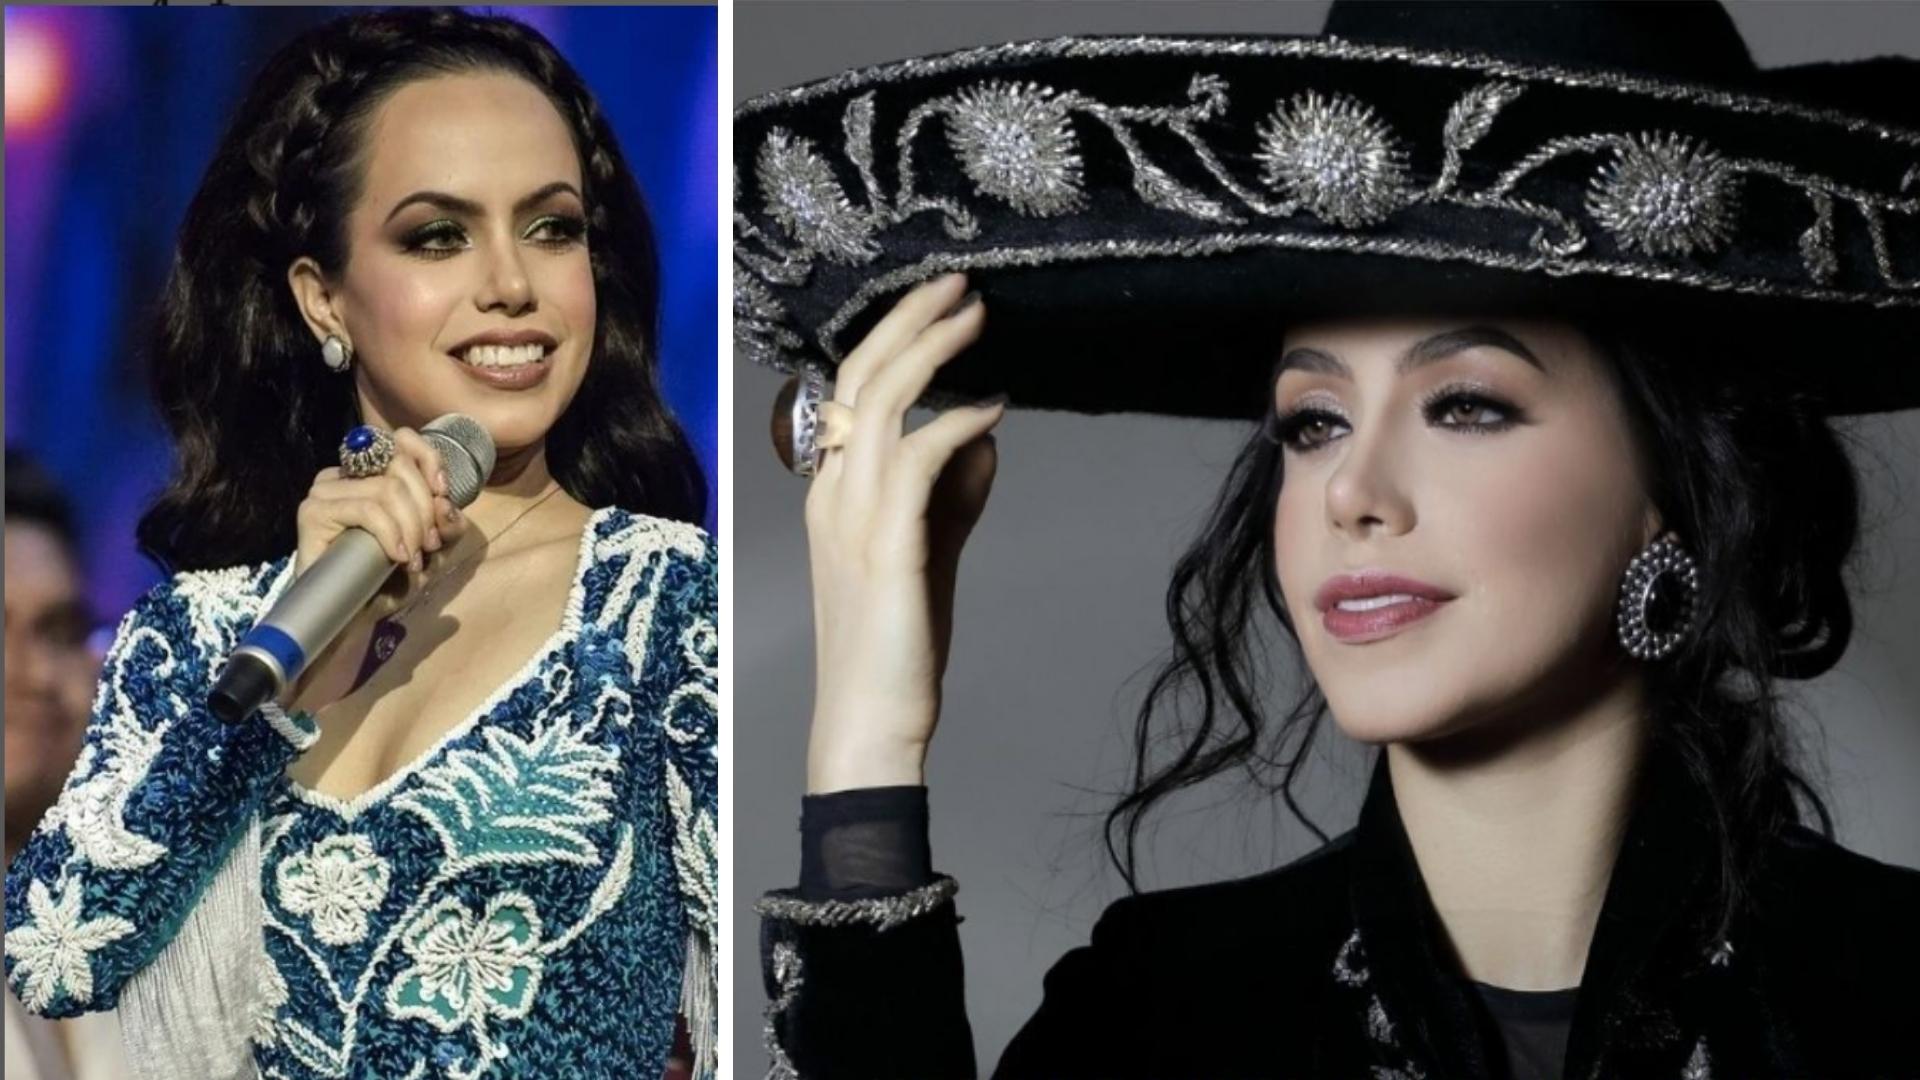 Matan a tiros a cantante mexicana Yrma Lydya